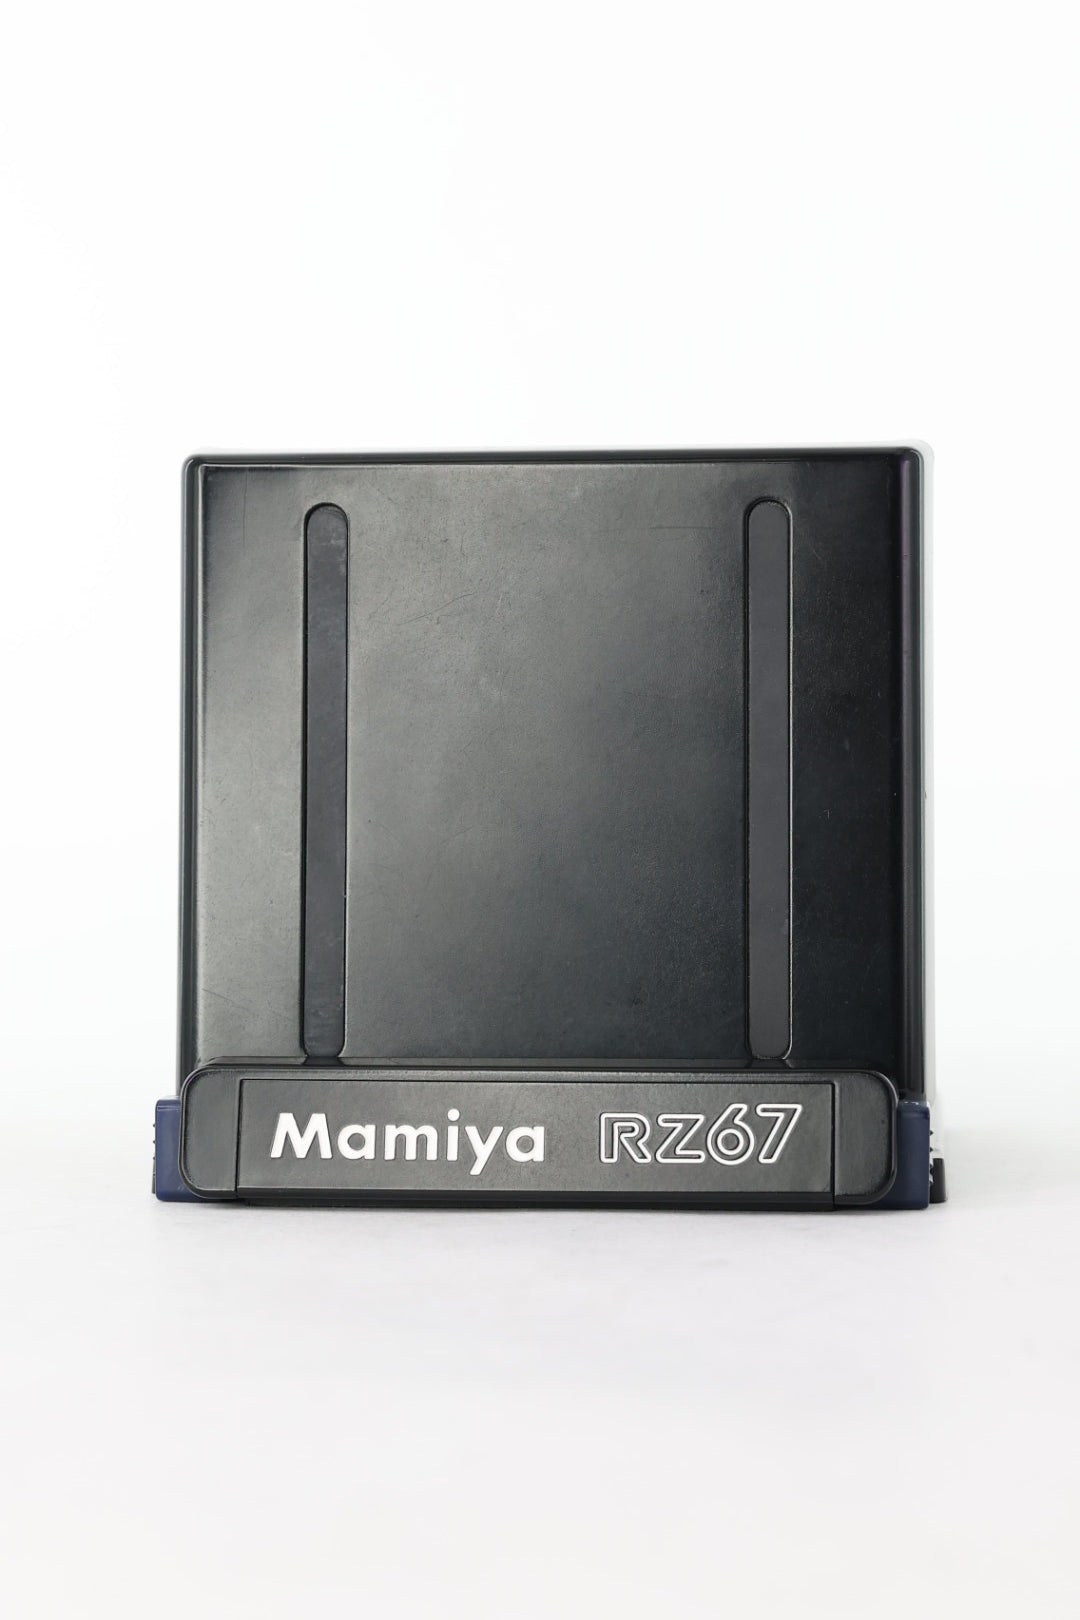 Mamiya RZ67 Waist Level Viewfinder, Used